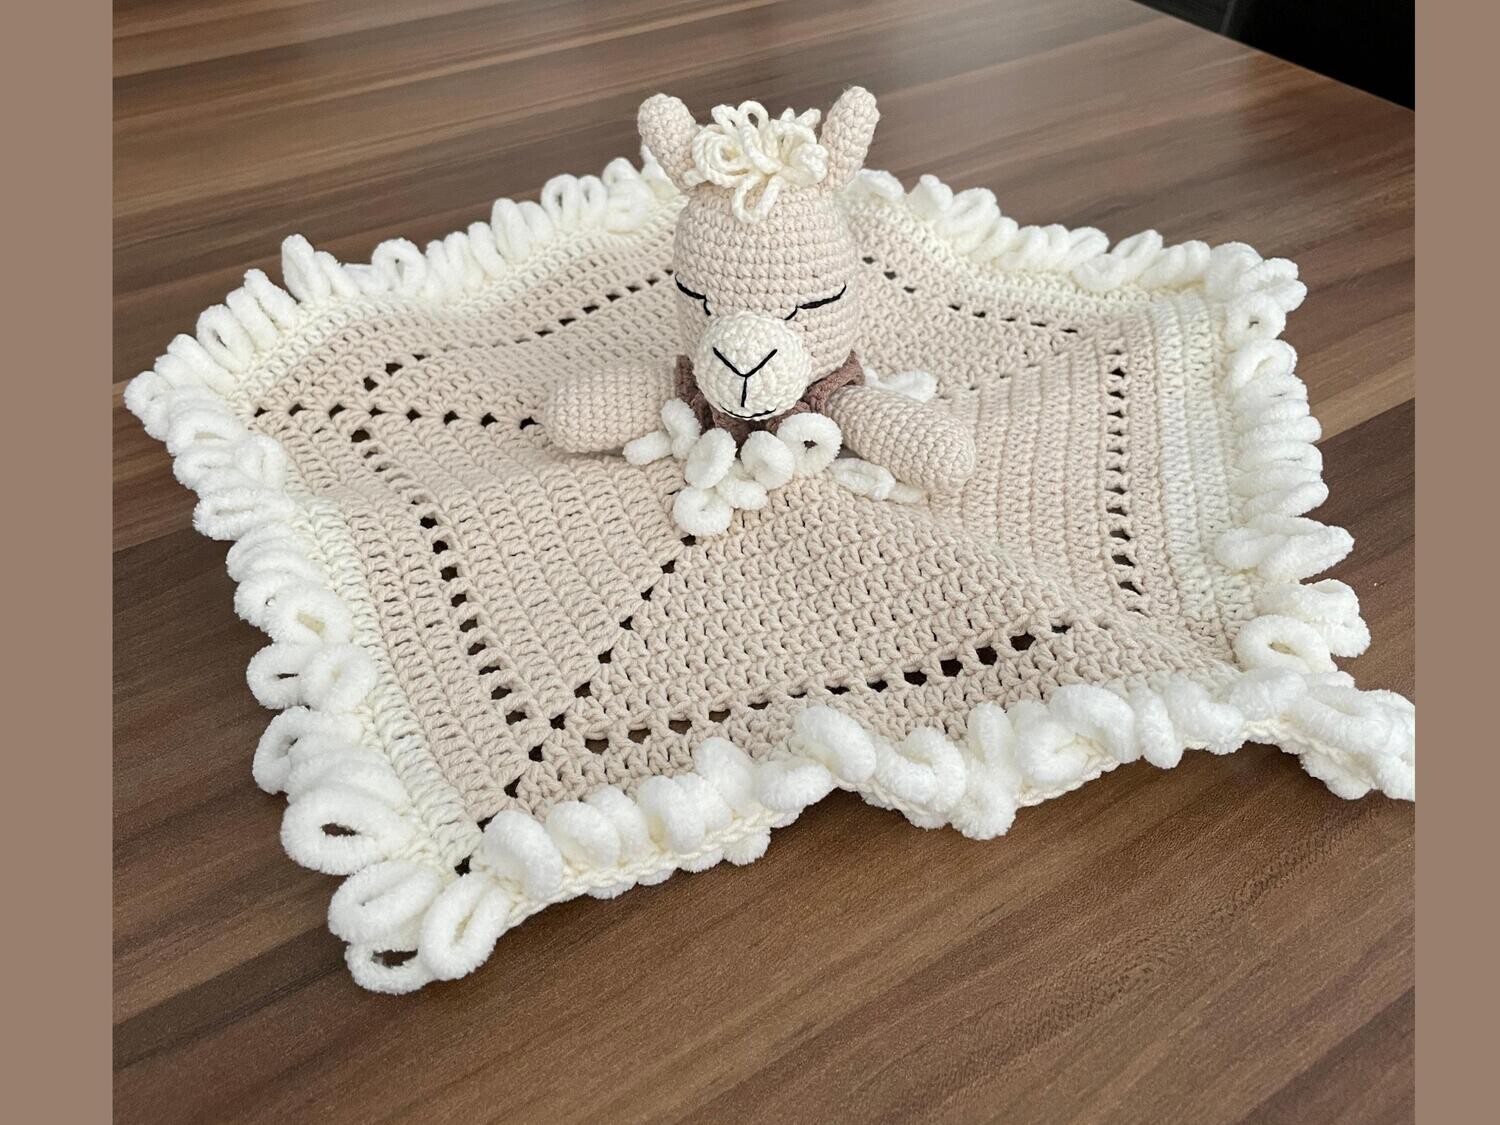 Baby security blanket amigurumi crochet pattern, llama baby lovey handmade, alpaca first soft toy, baby boy girl shower gift